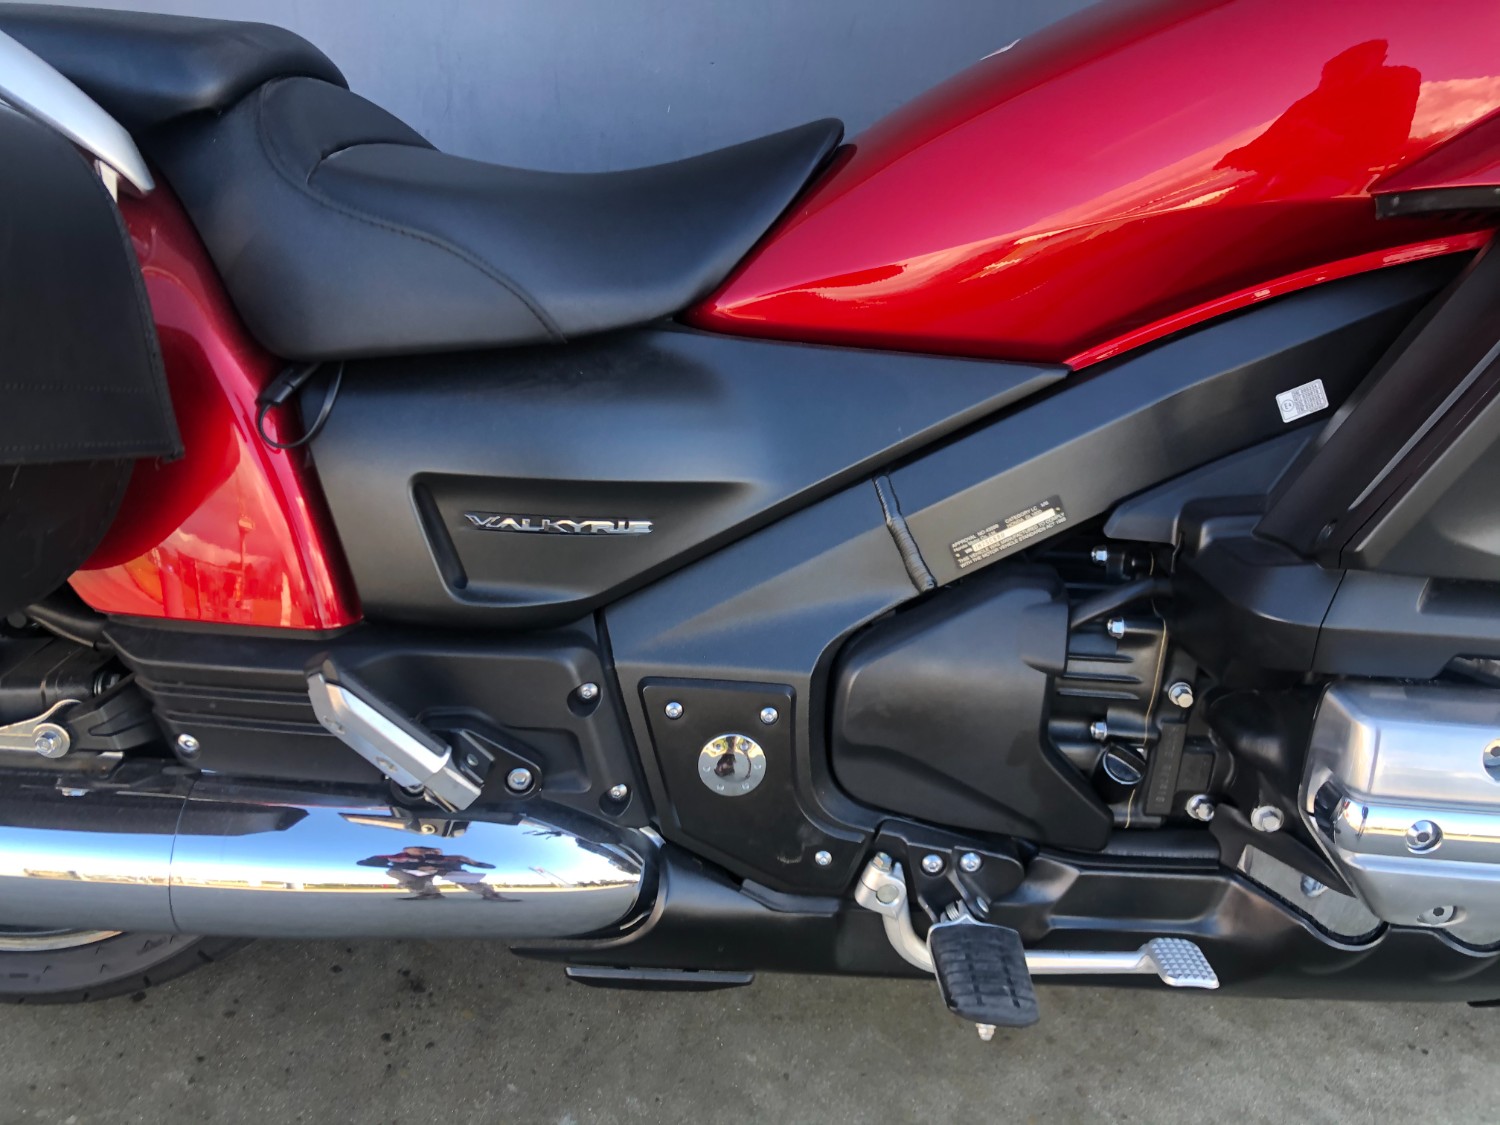 2015 Honda Valkyrie 1800cc GL1800C Motorcycle Image 8